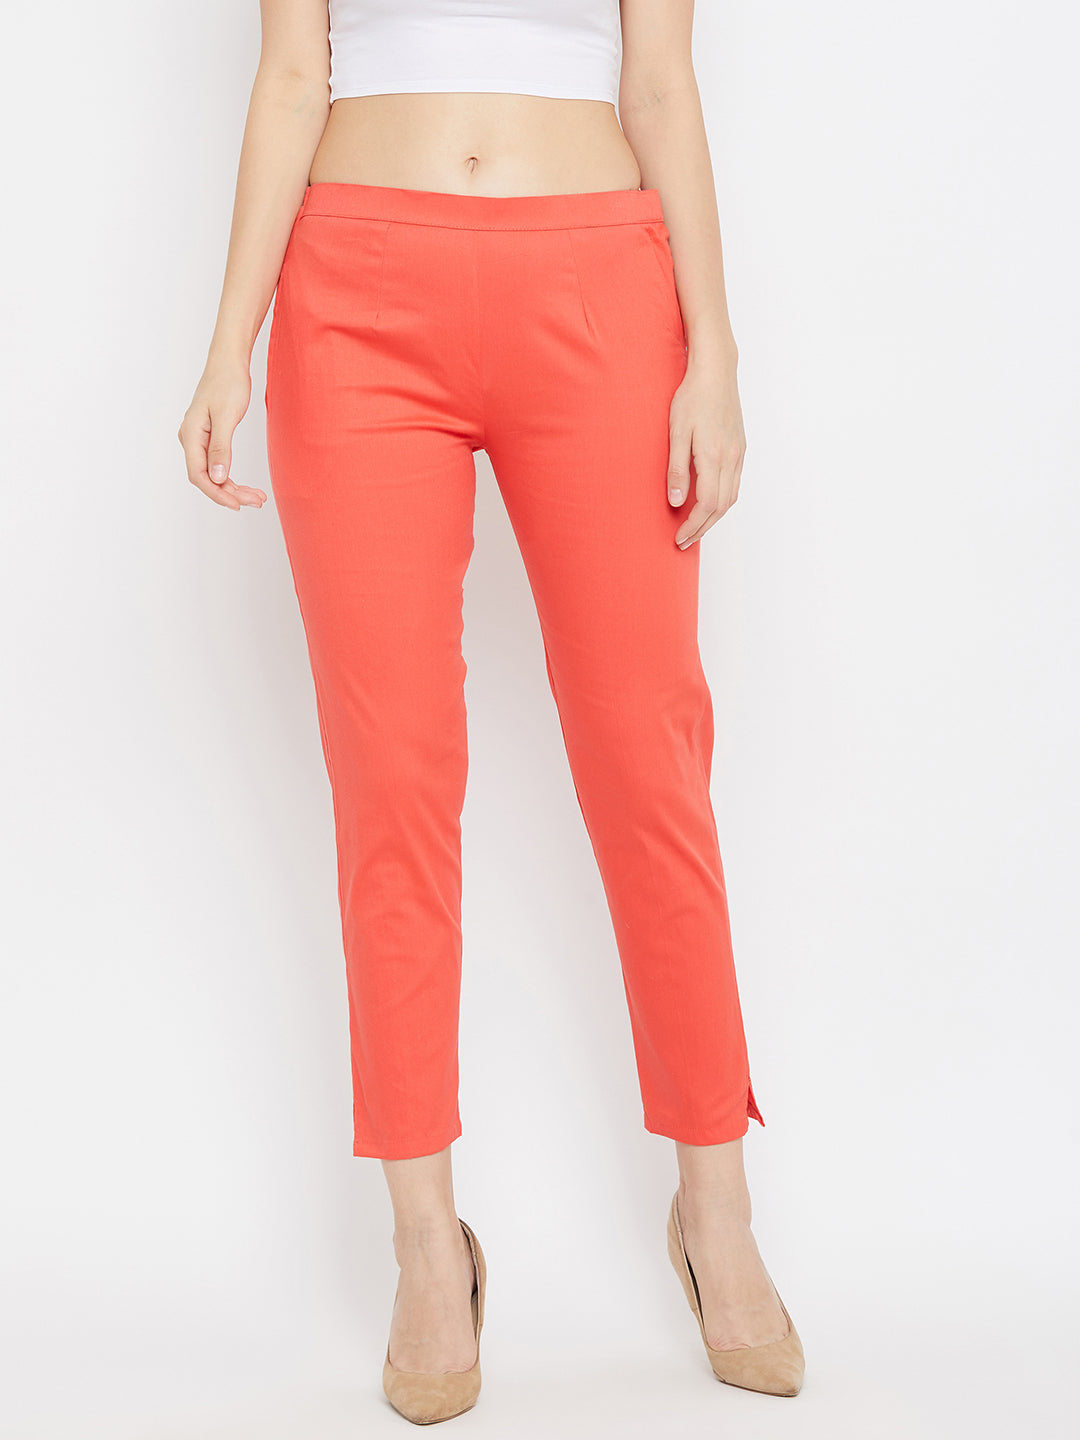 Buy Hitashi Fashion Peach Taffeta Silk Pant for Women at Amazonin